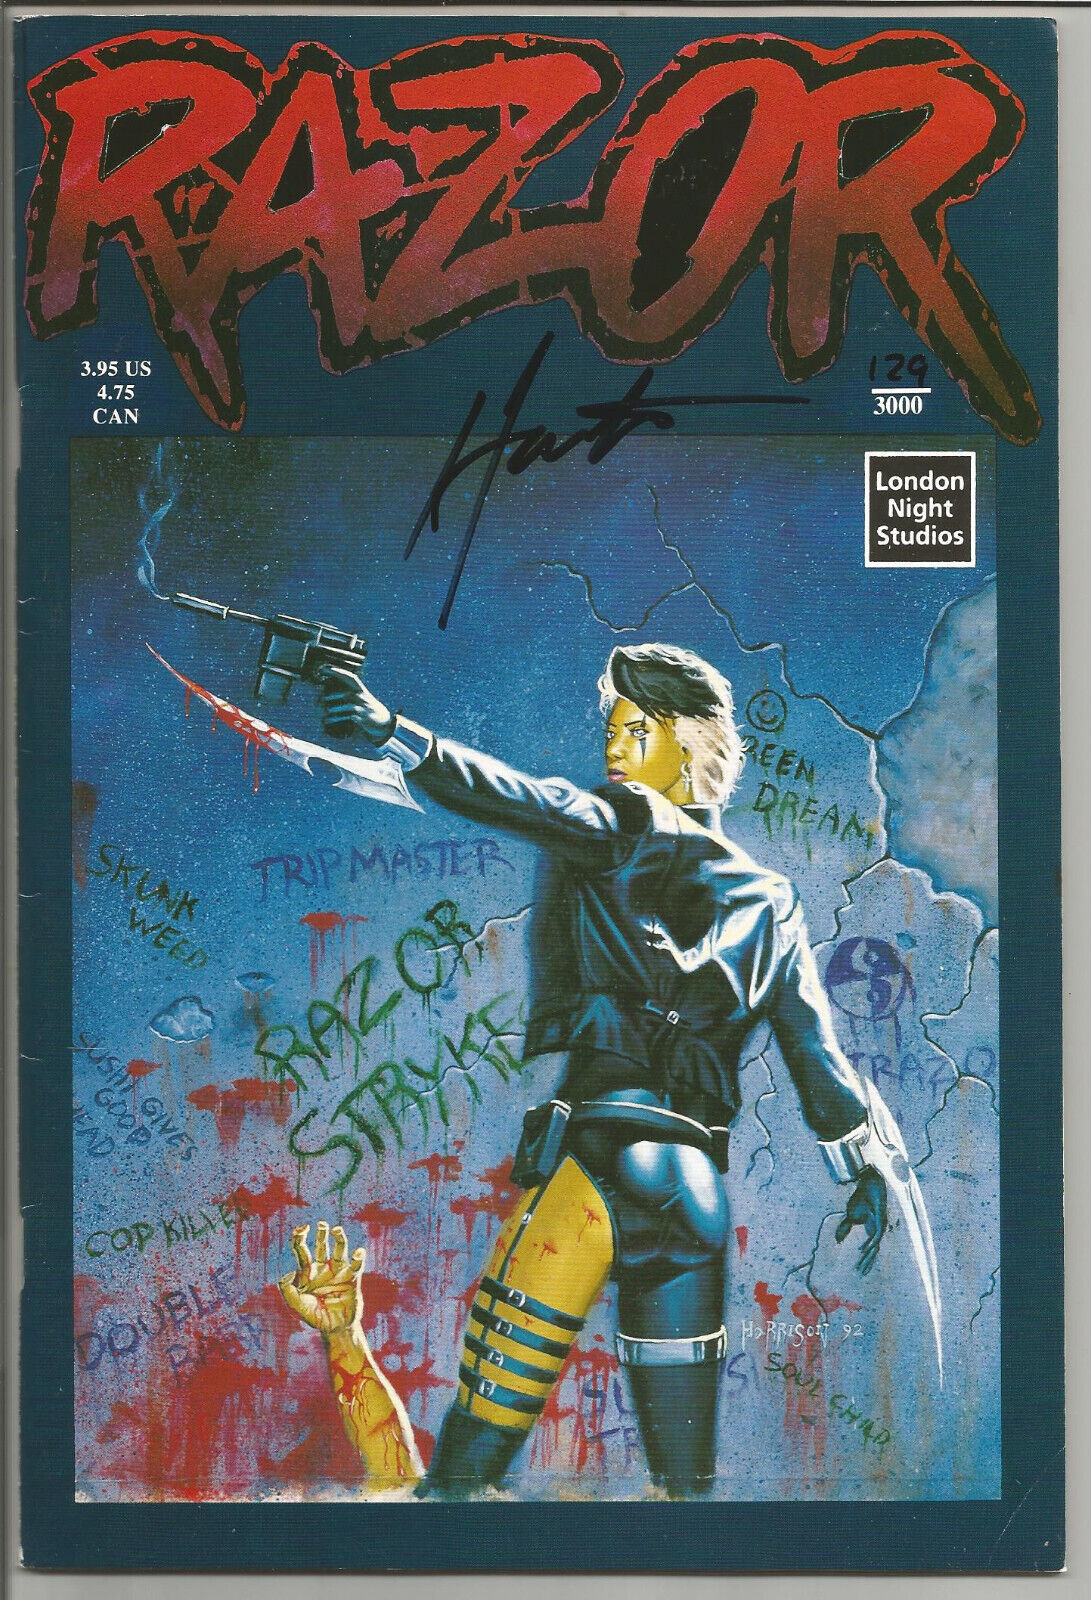 RAZOR #2 w/Poster SIGNED/LTD. #129 of 3000 (1992, London Night) 